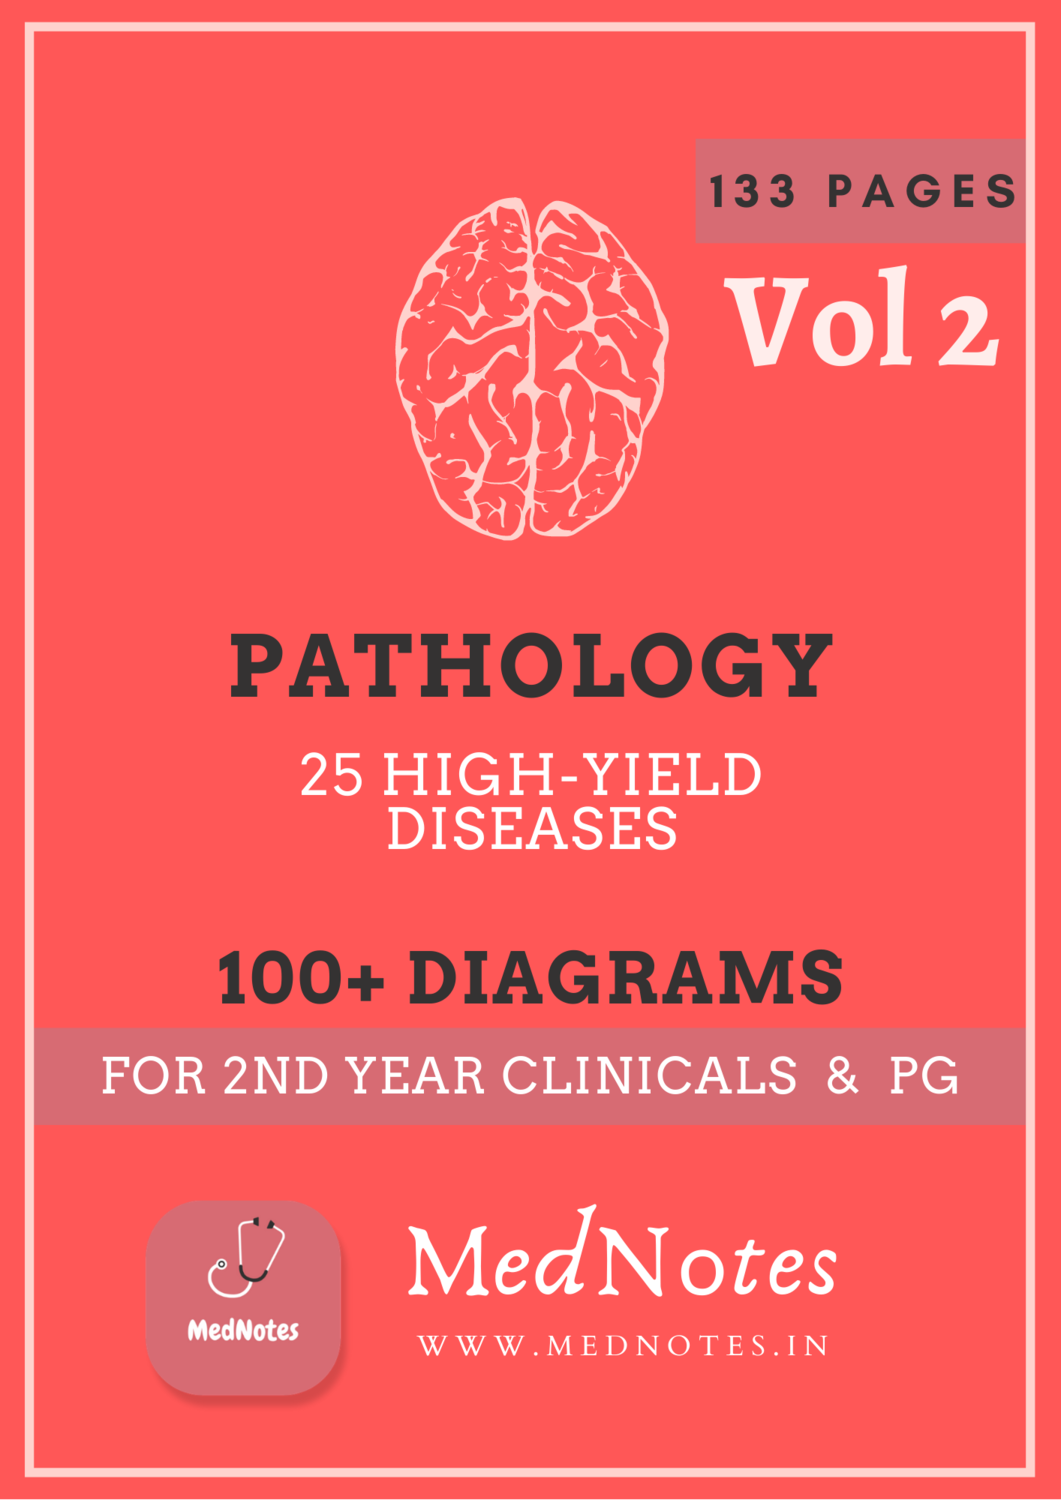 Pathology - 25 HIGH-YIELD DISEASES [ E-book] - Vol 2